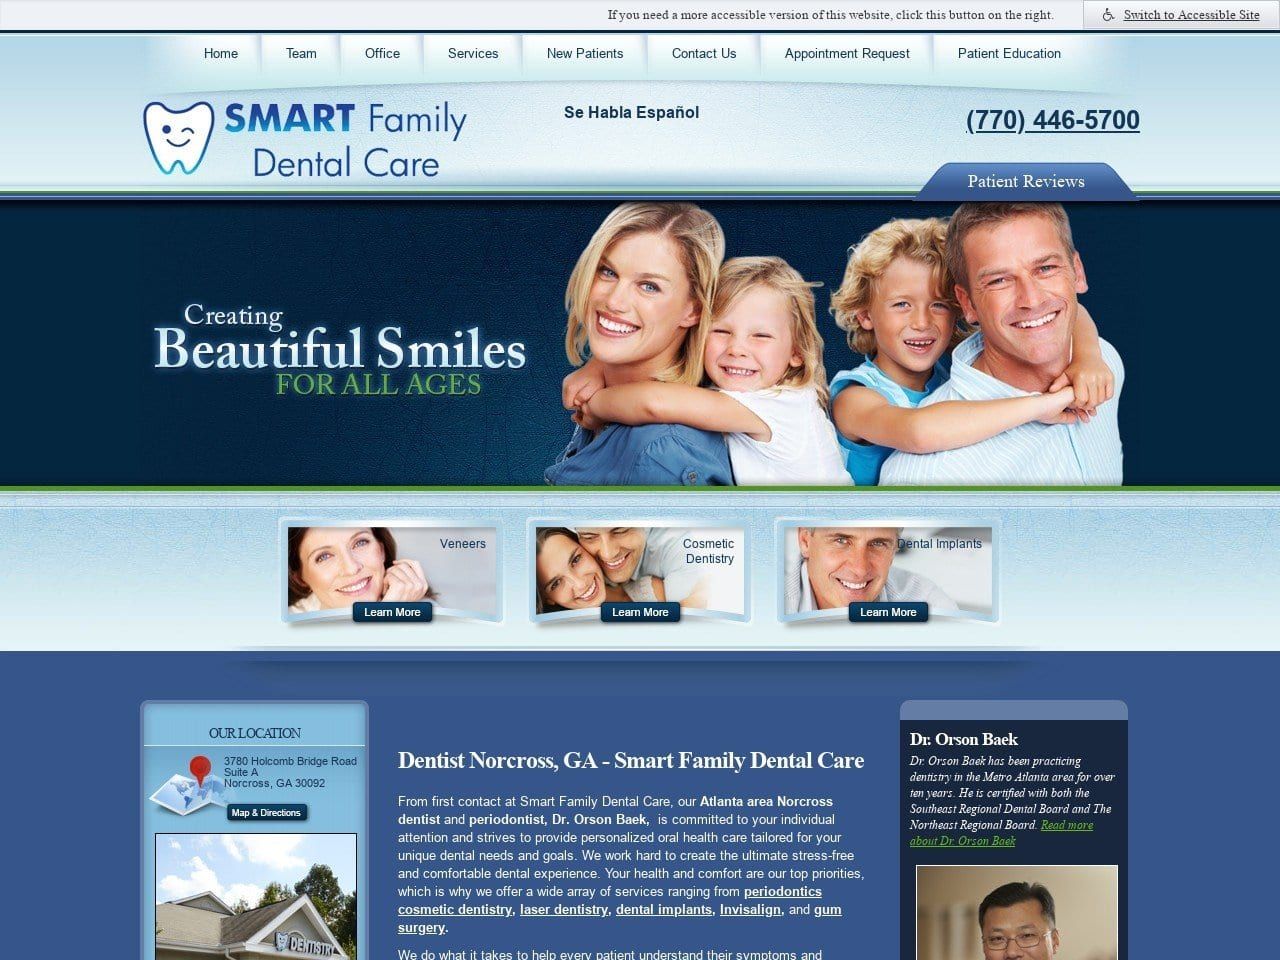 Smart Family Dental Care Website Screenshot from smartfamilydentalcare.com